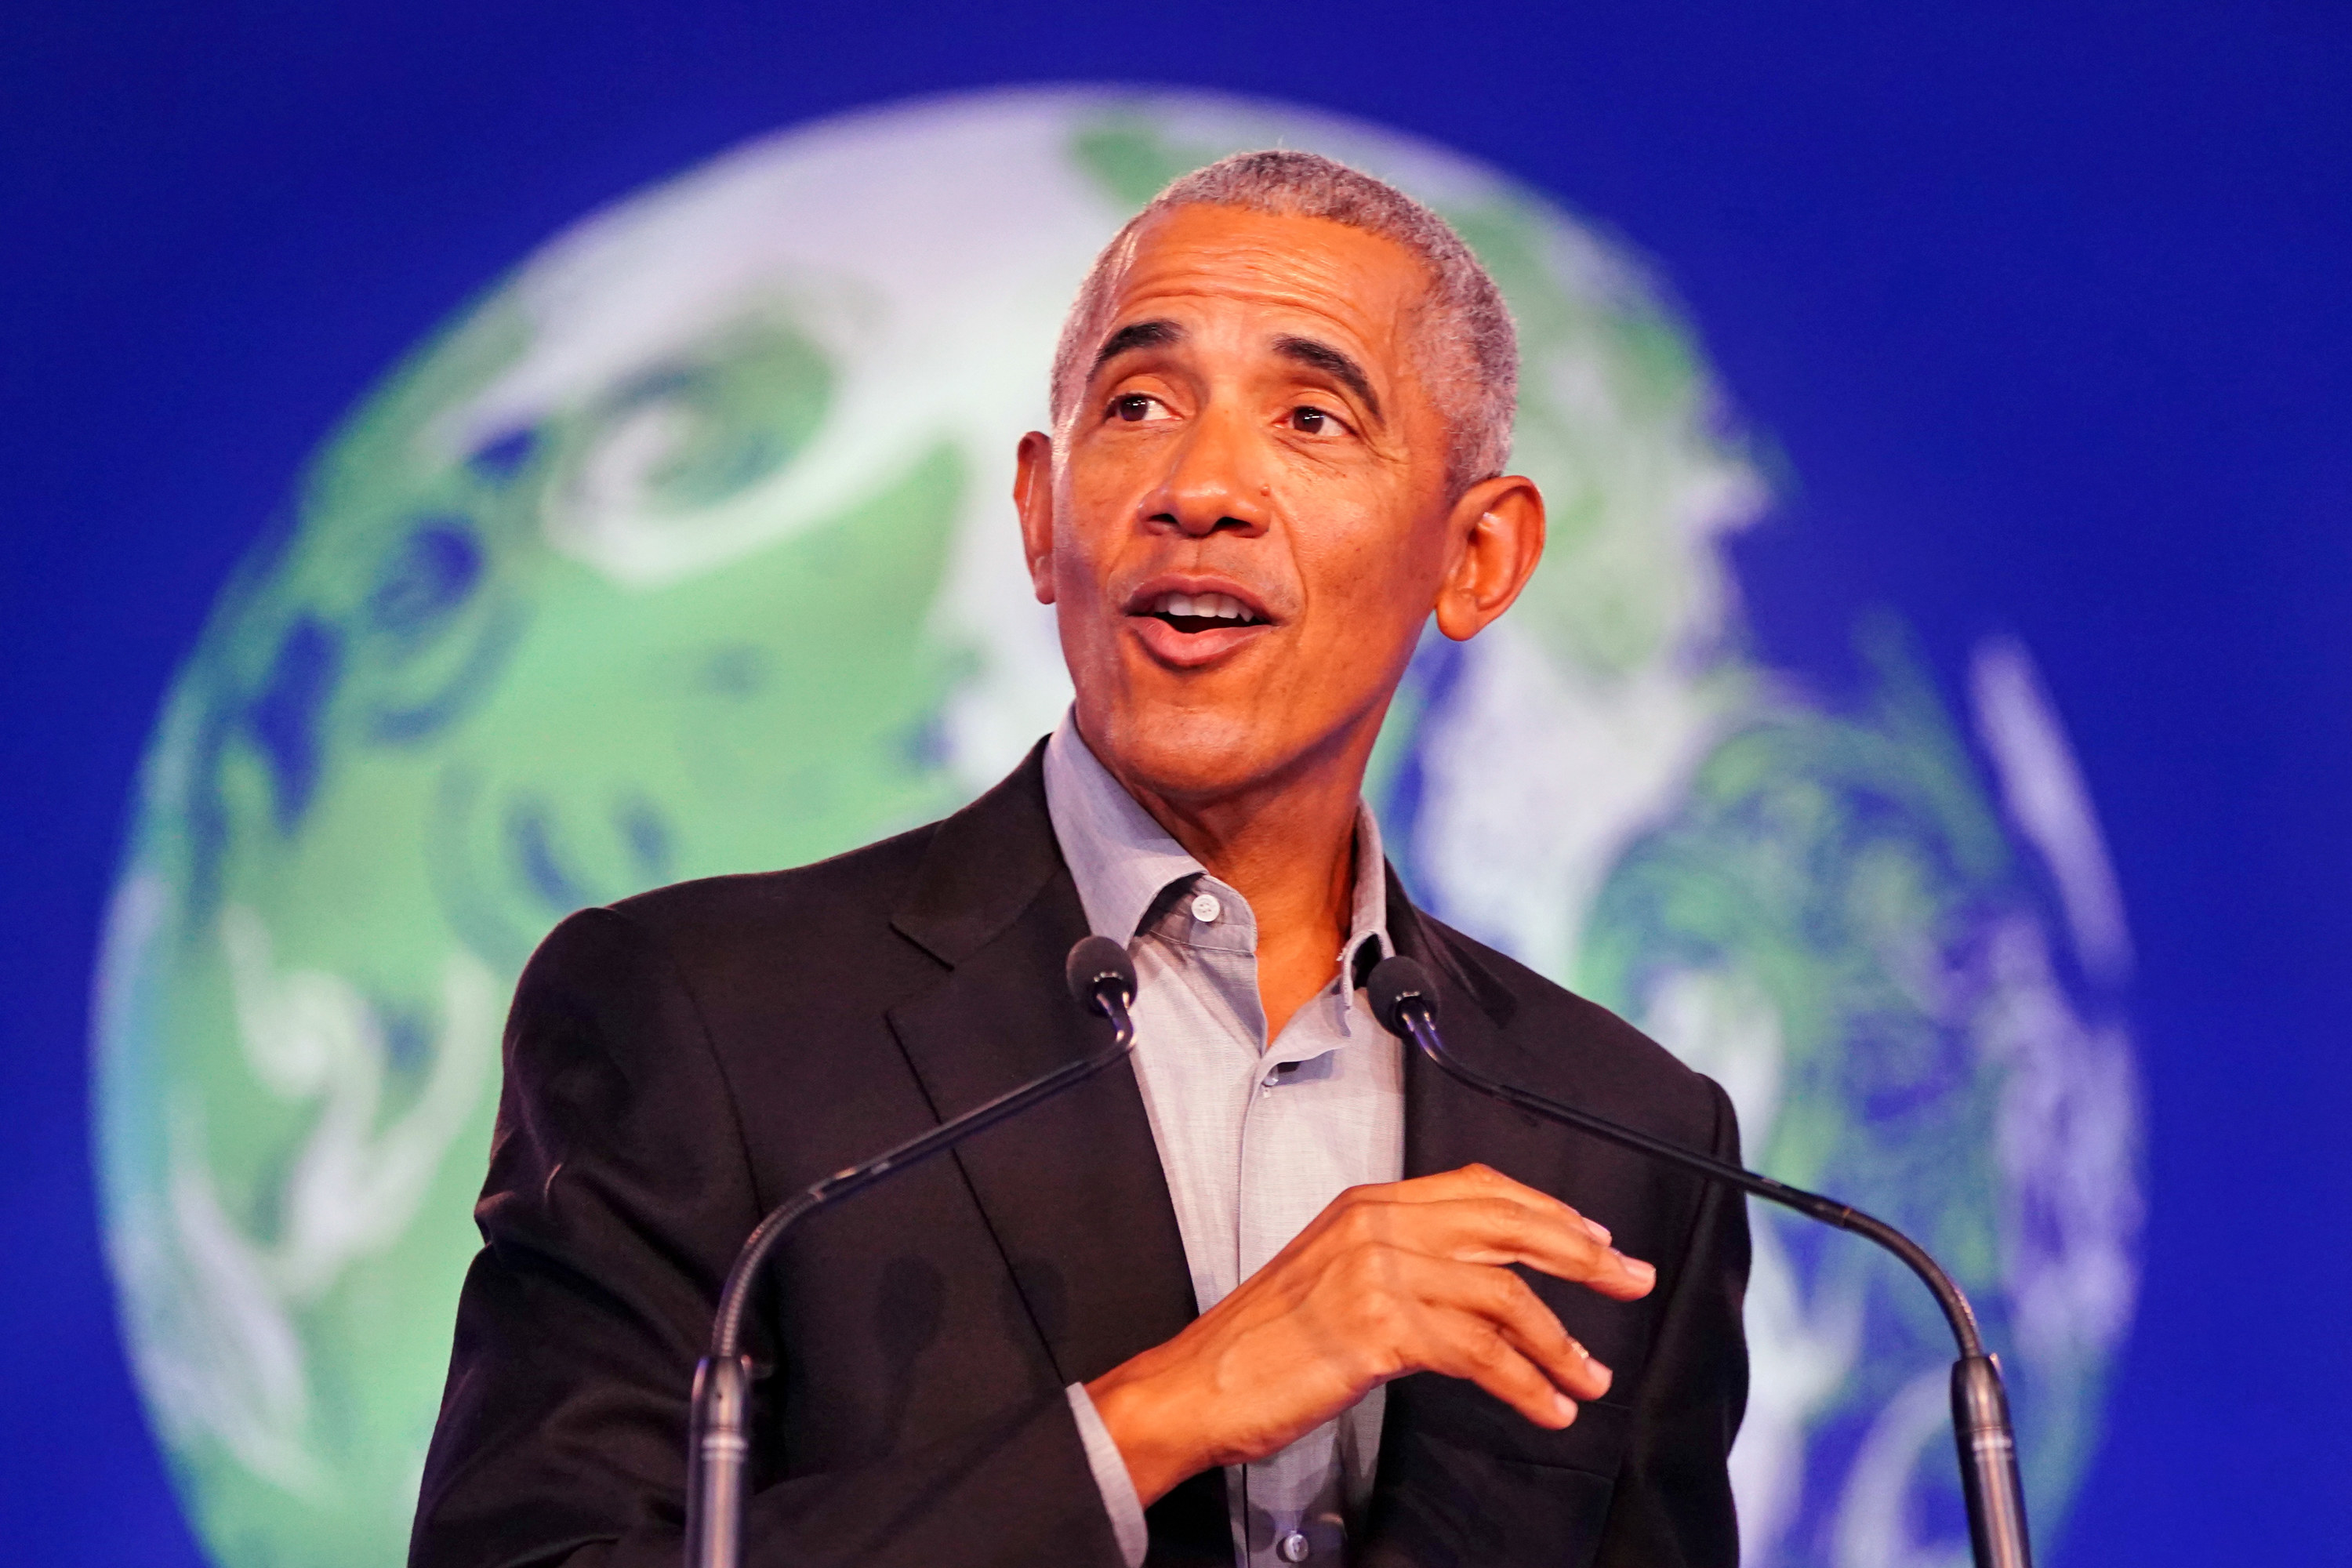 Barack Obama speaks during the Cop26 summit in November 2021